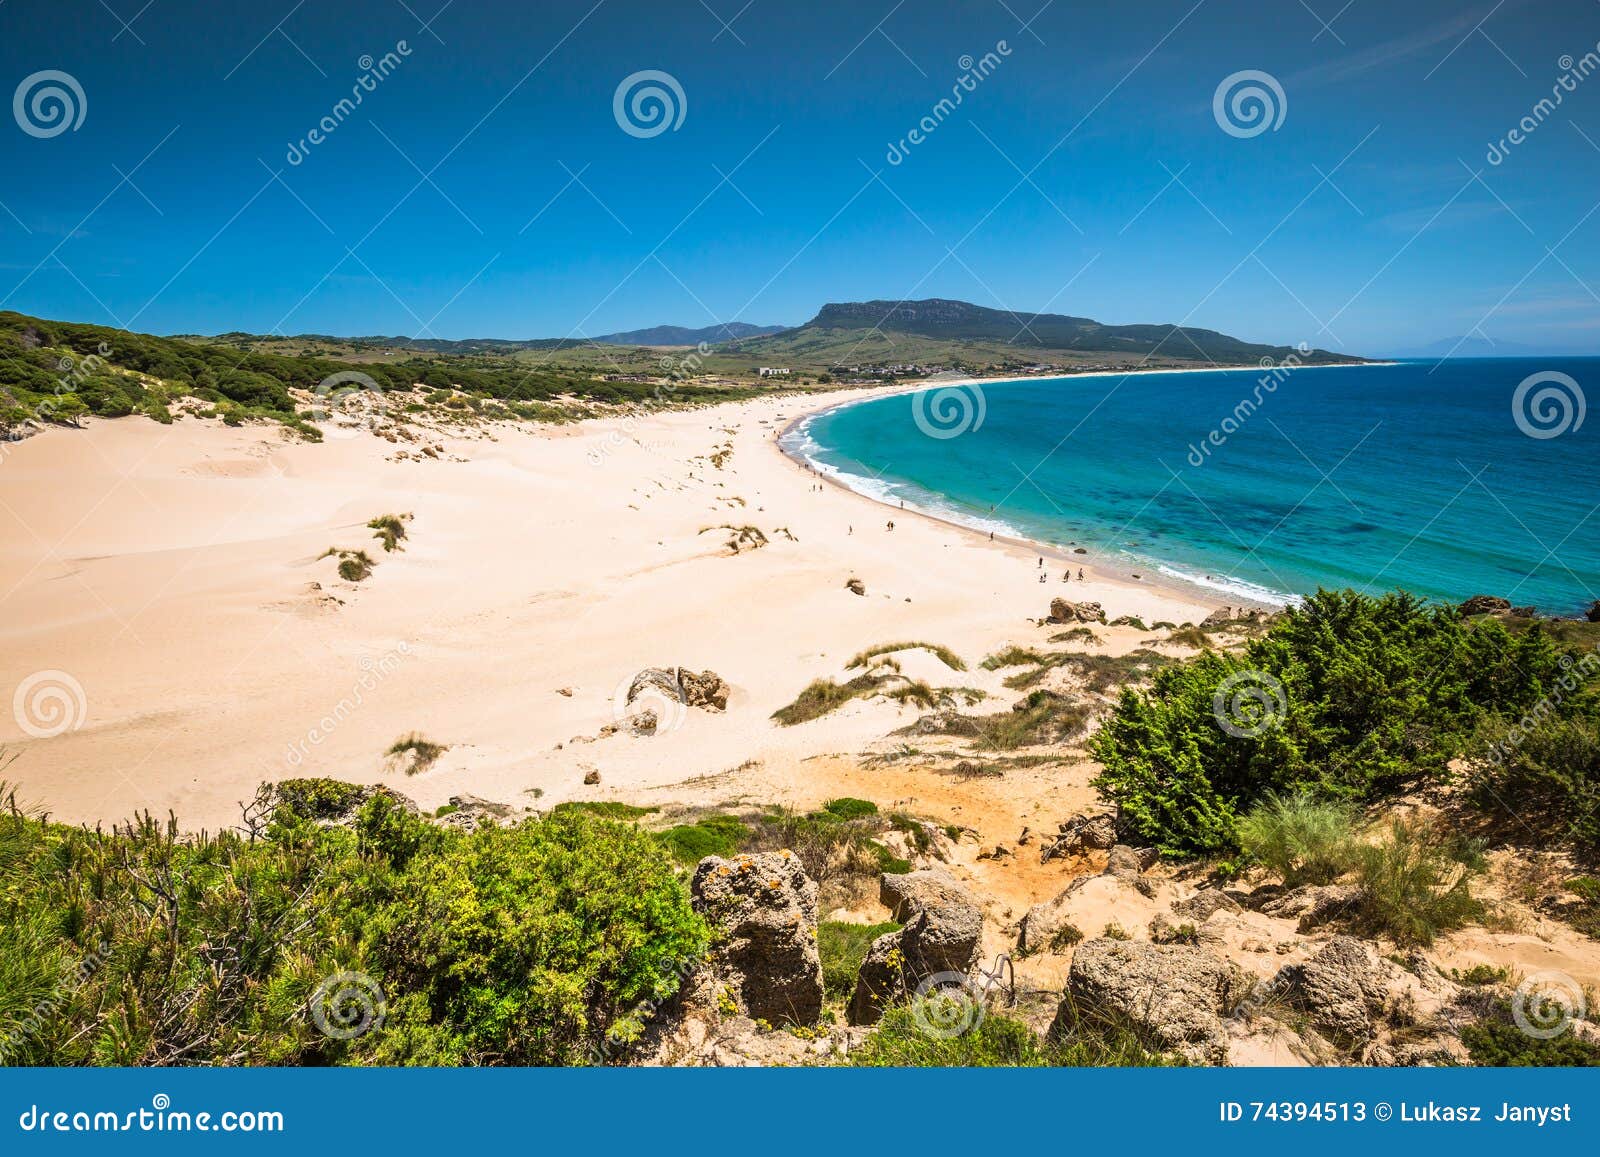 sand dune of bolonia beach, province cadiz, andalucia, spain